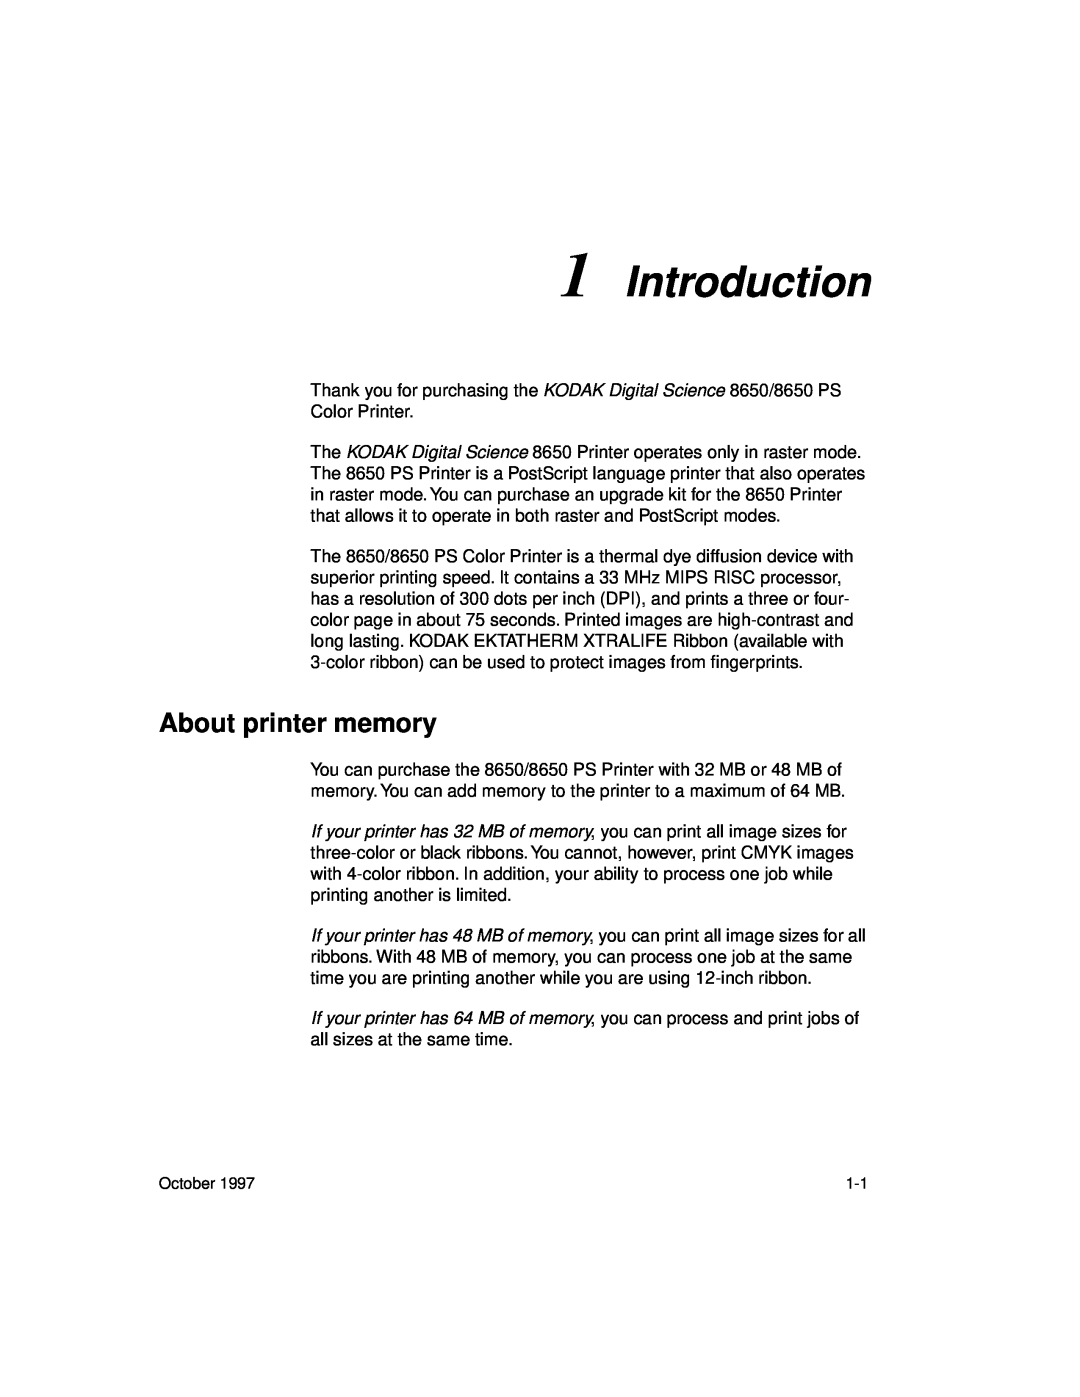 Kodak 8650 manual Introduction, About printer memory 